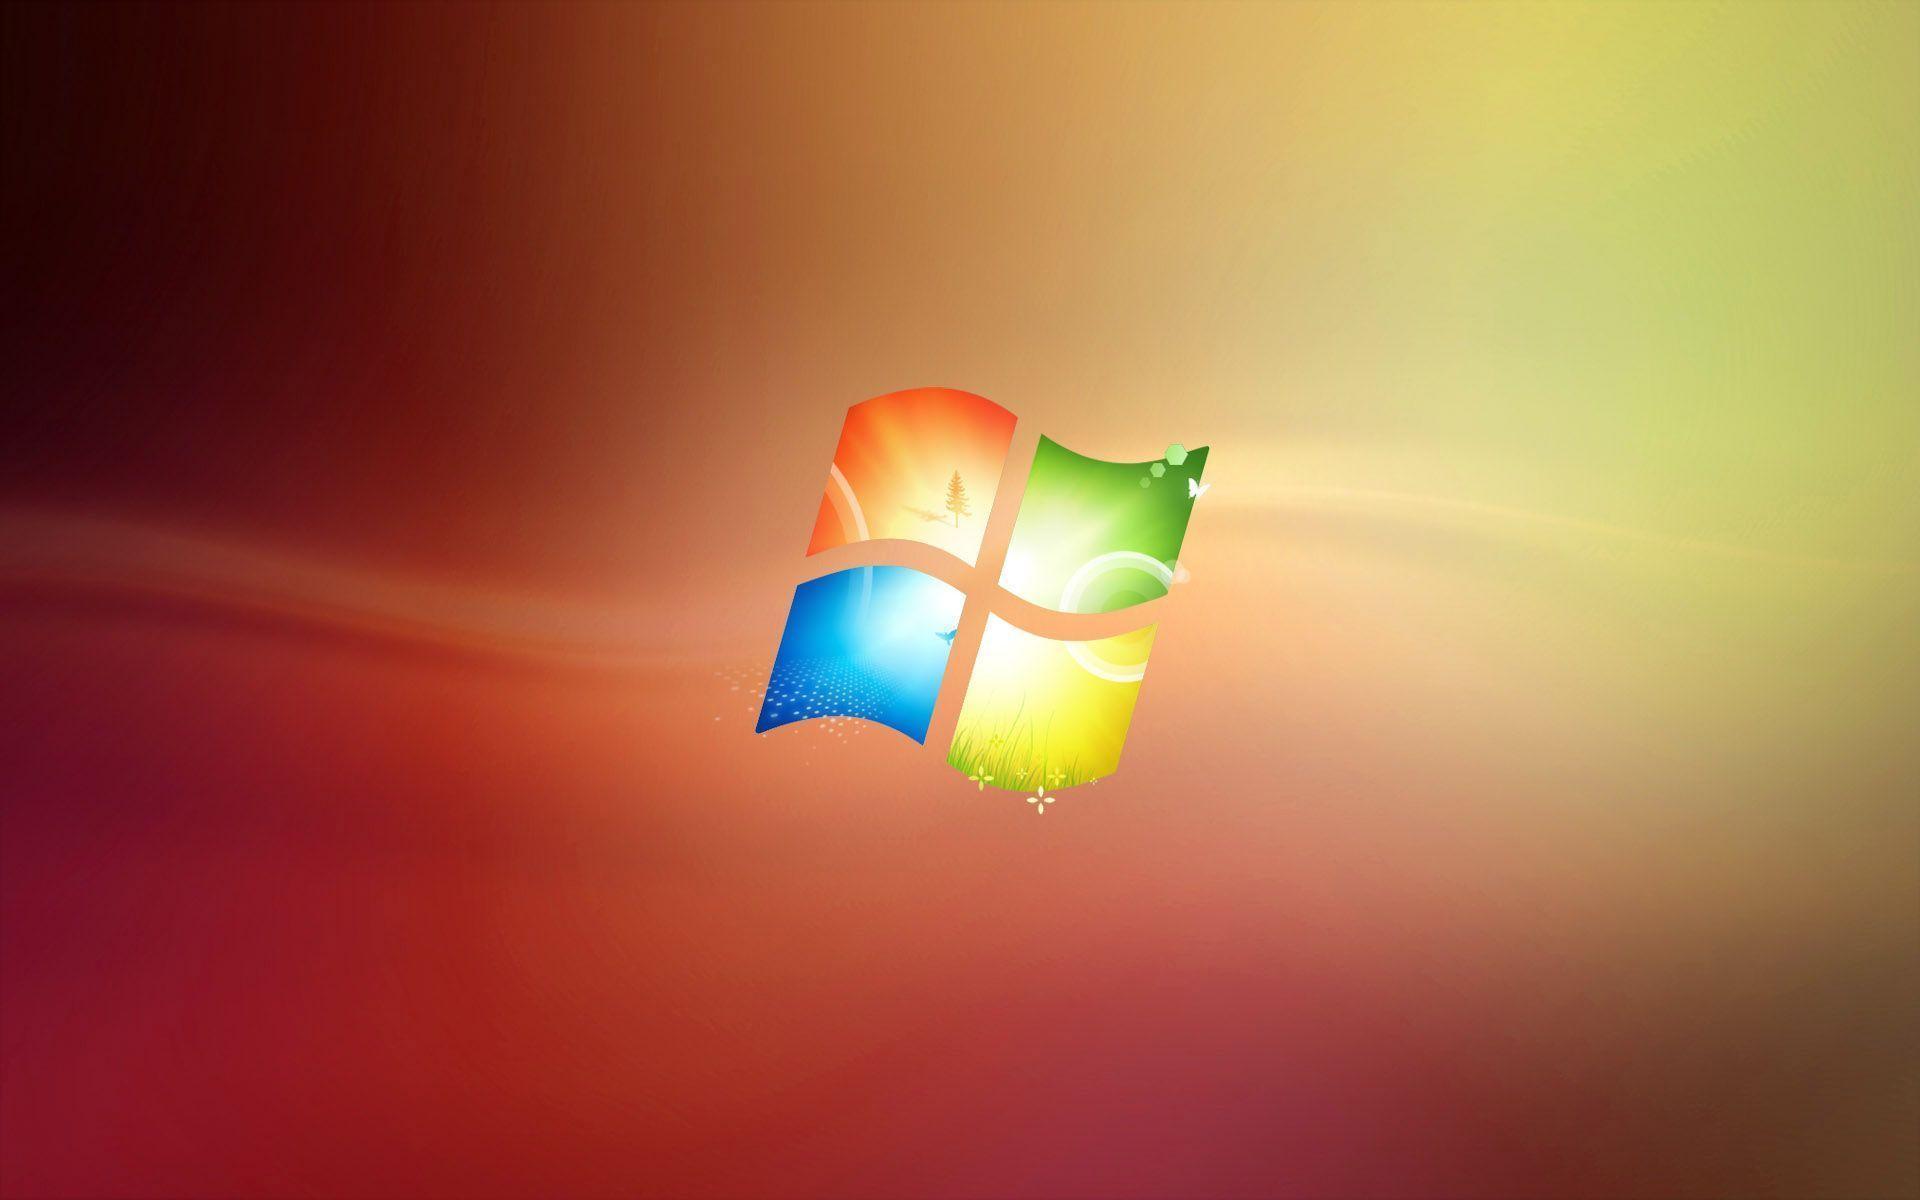 Windows - Windows 7 Summer Theme HD wallpaper and background